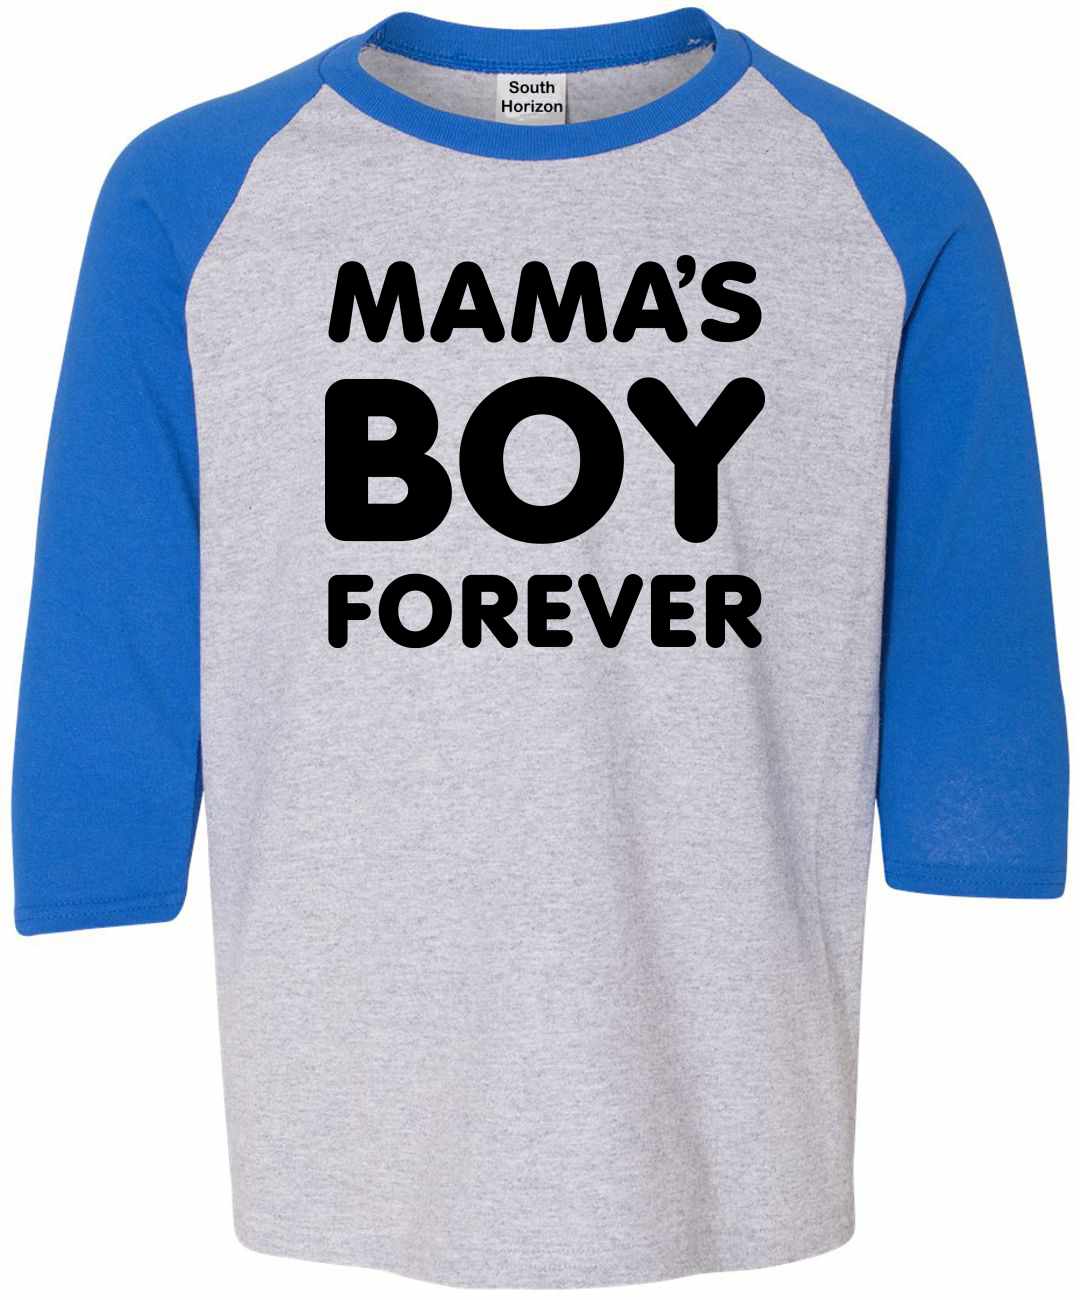 Mama's Boy Forever on Youth Baseball Shirt (#1223-212)